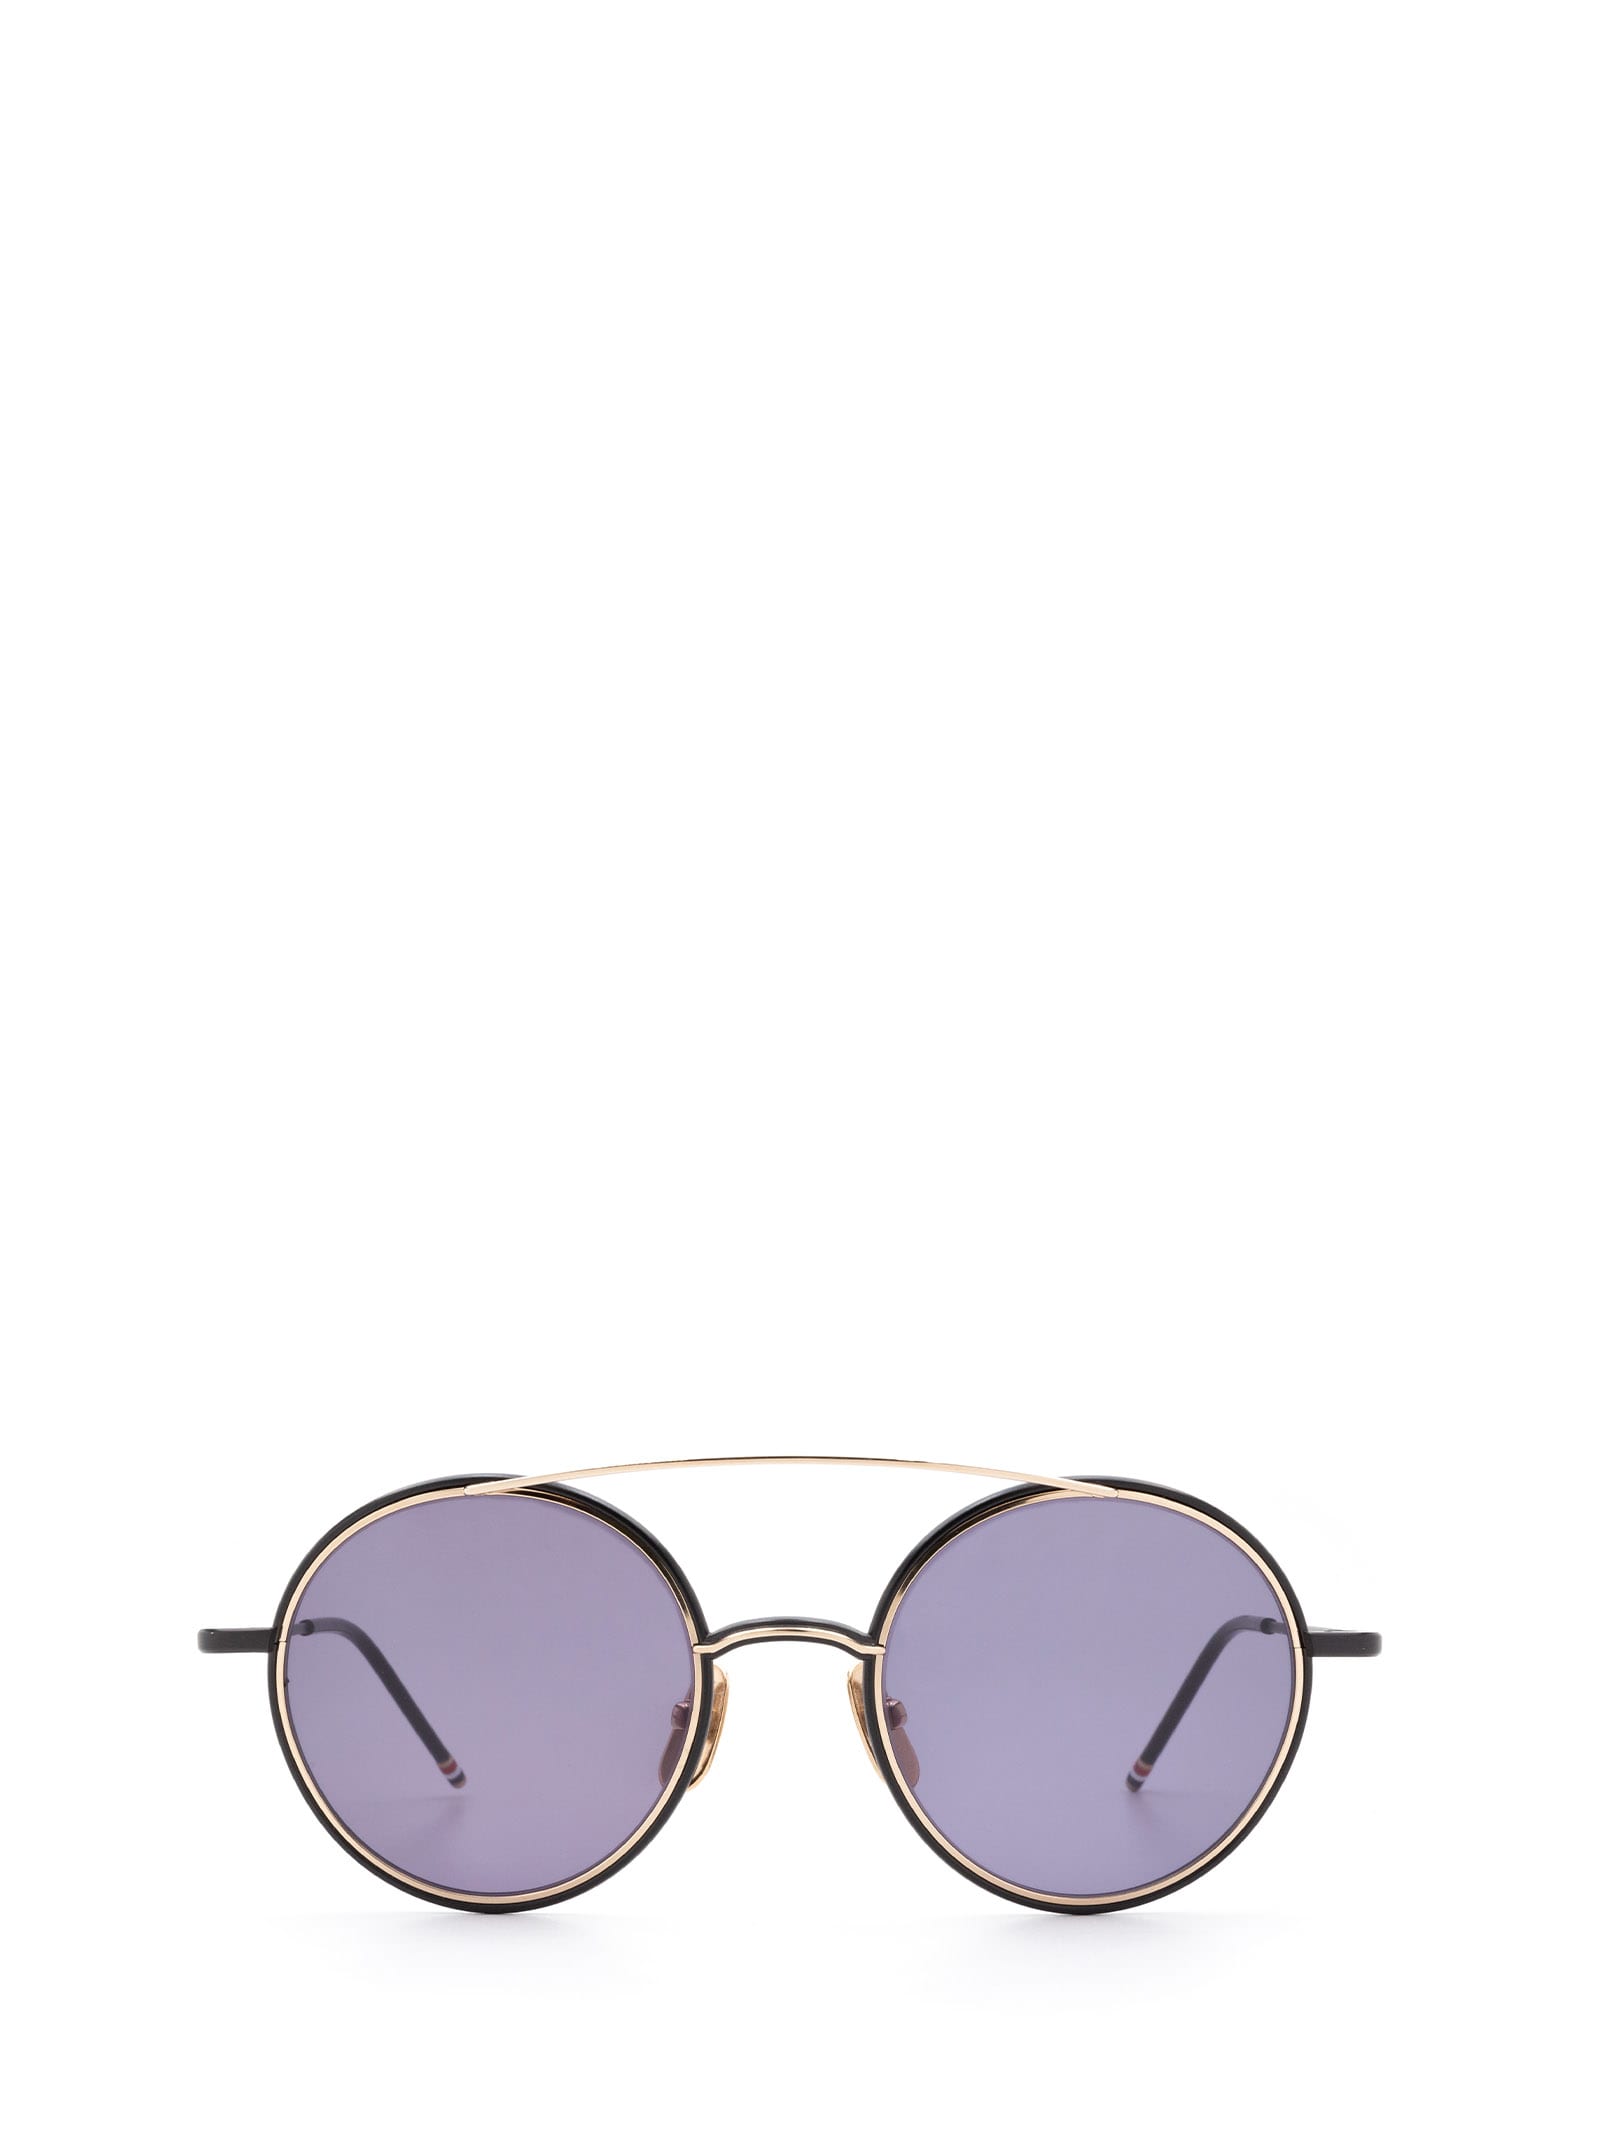 Tb108 A-t-blk-gld Sunglasses